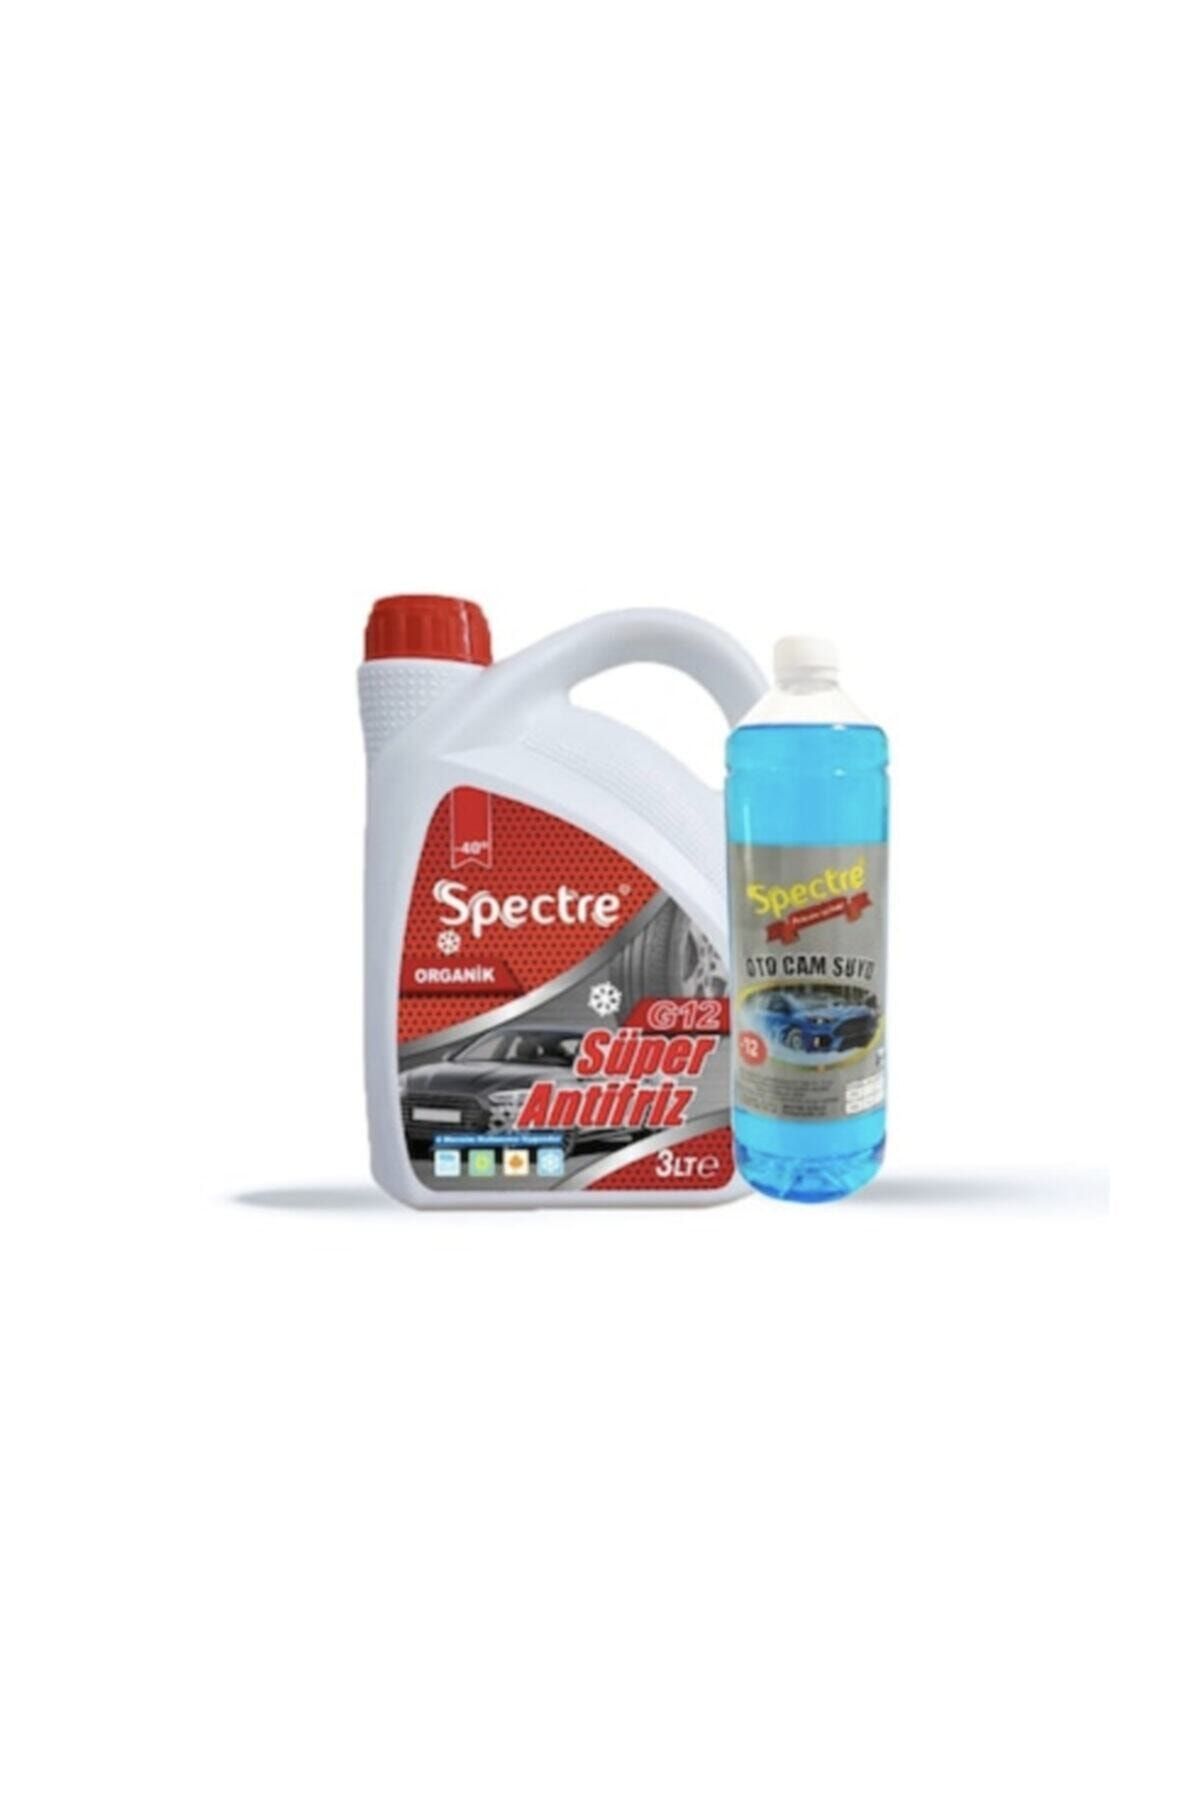 SPECTRE Organik Süper -40 Kırmızı Antifriz 3 Litre + Cam Suyu 1lt